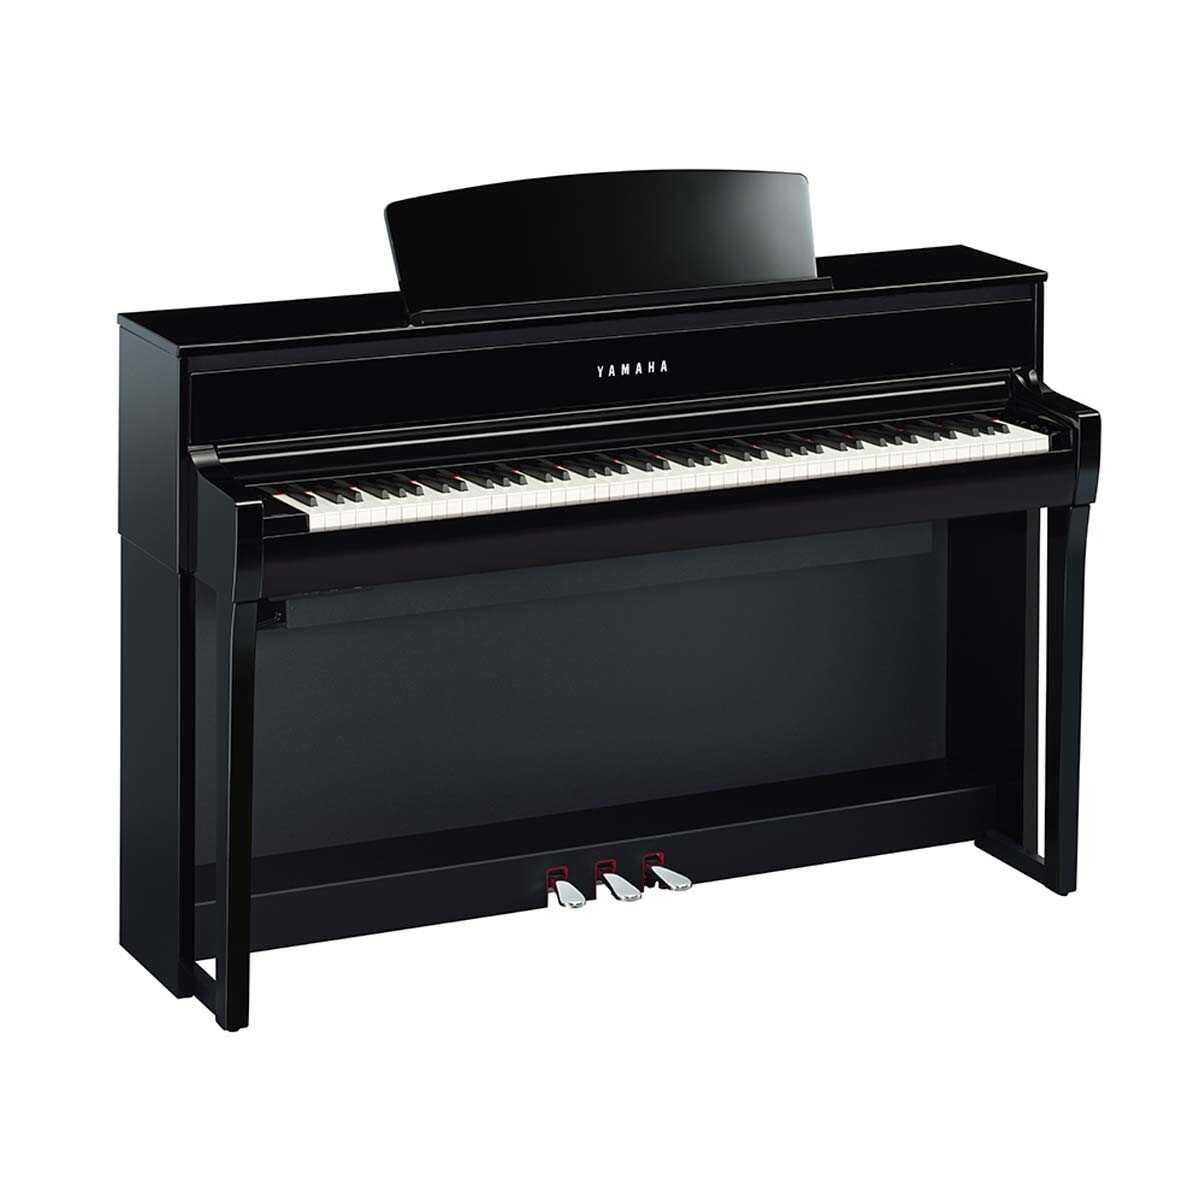 Piano Digital Yamaha Clp775pe 